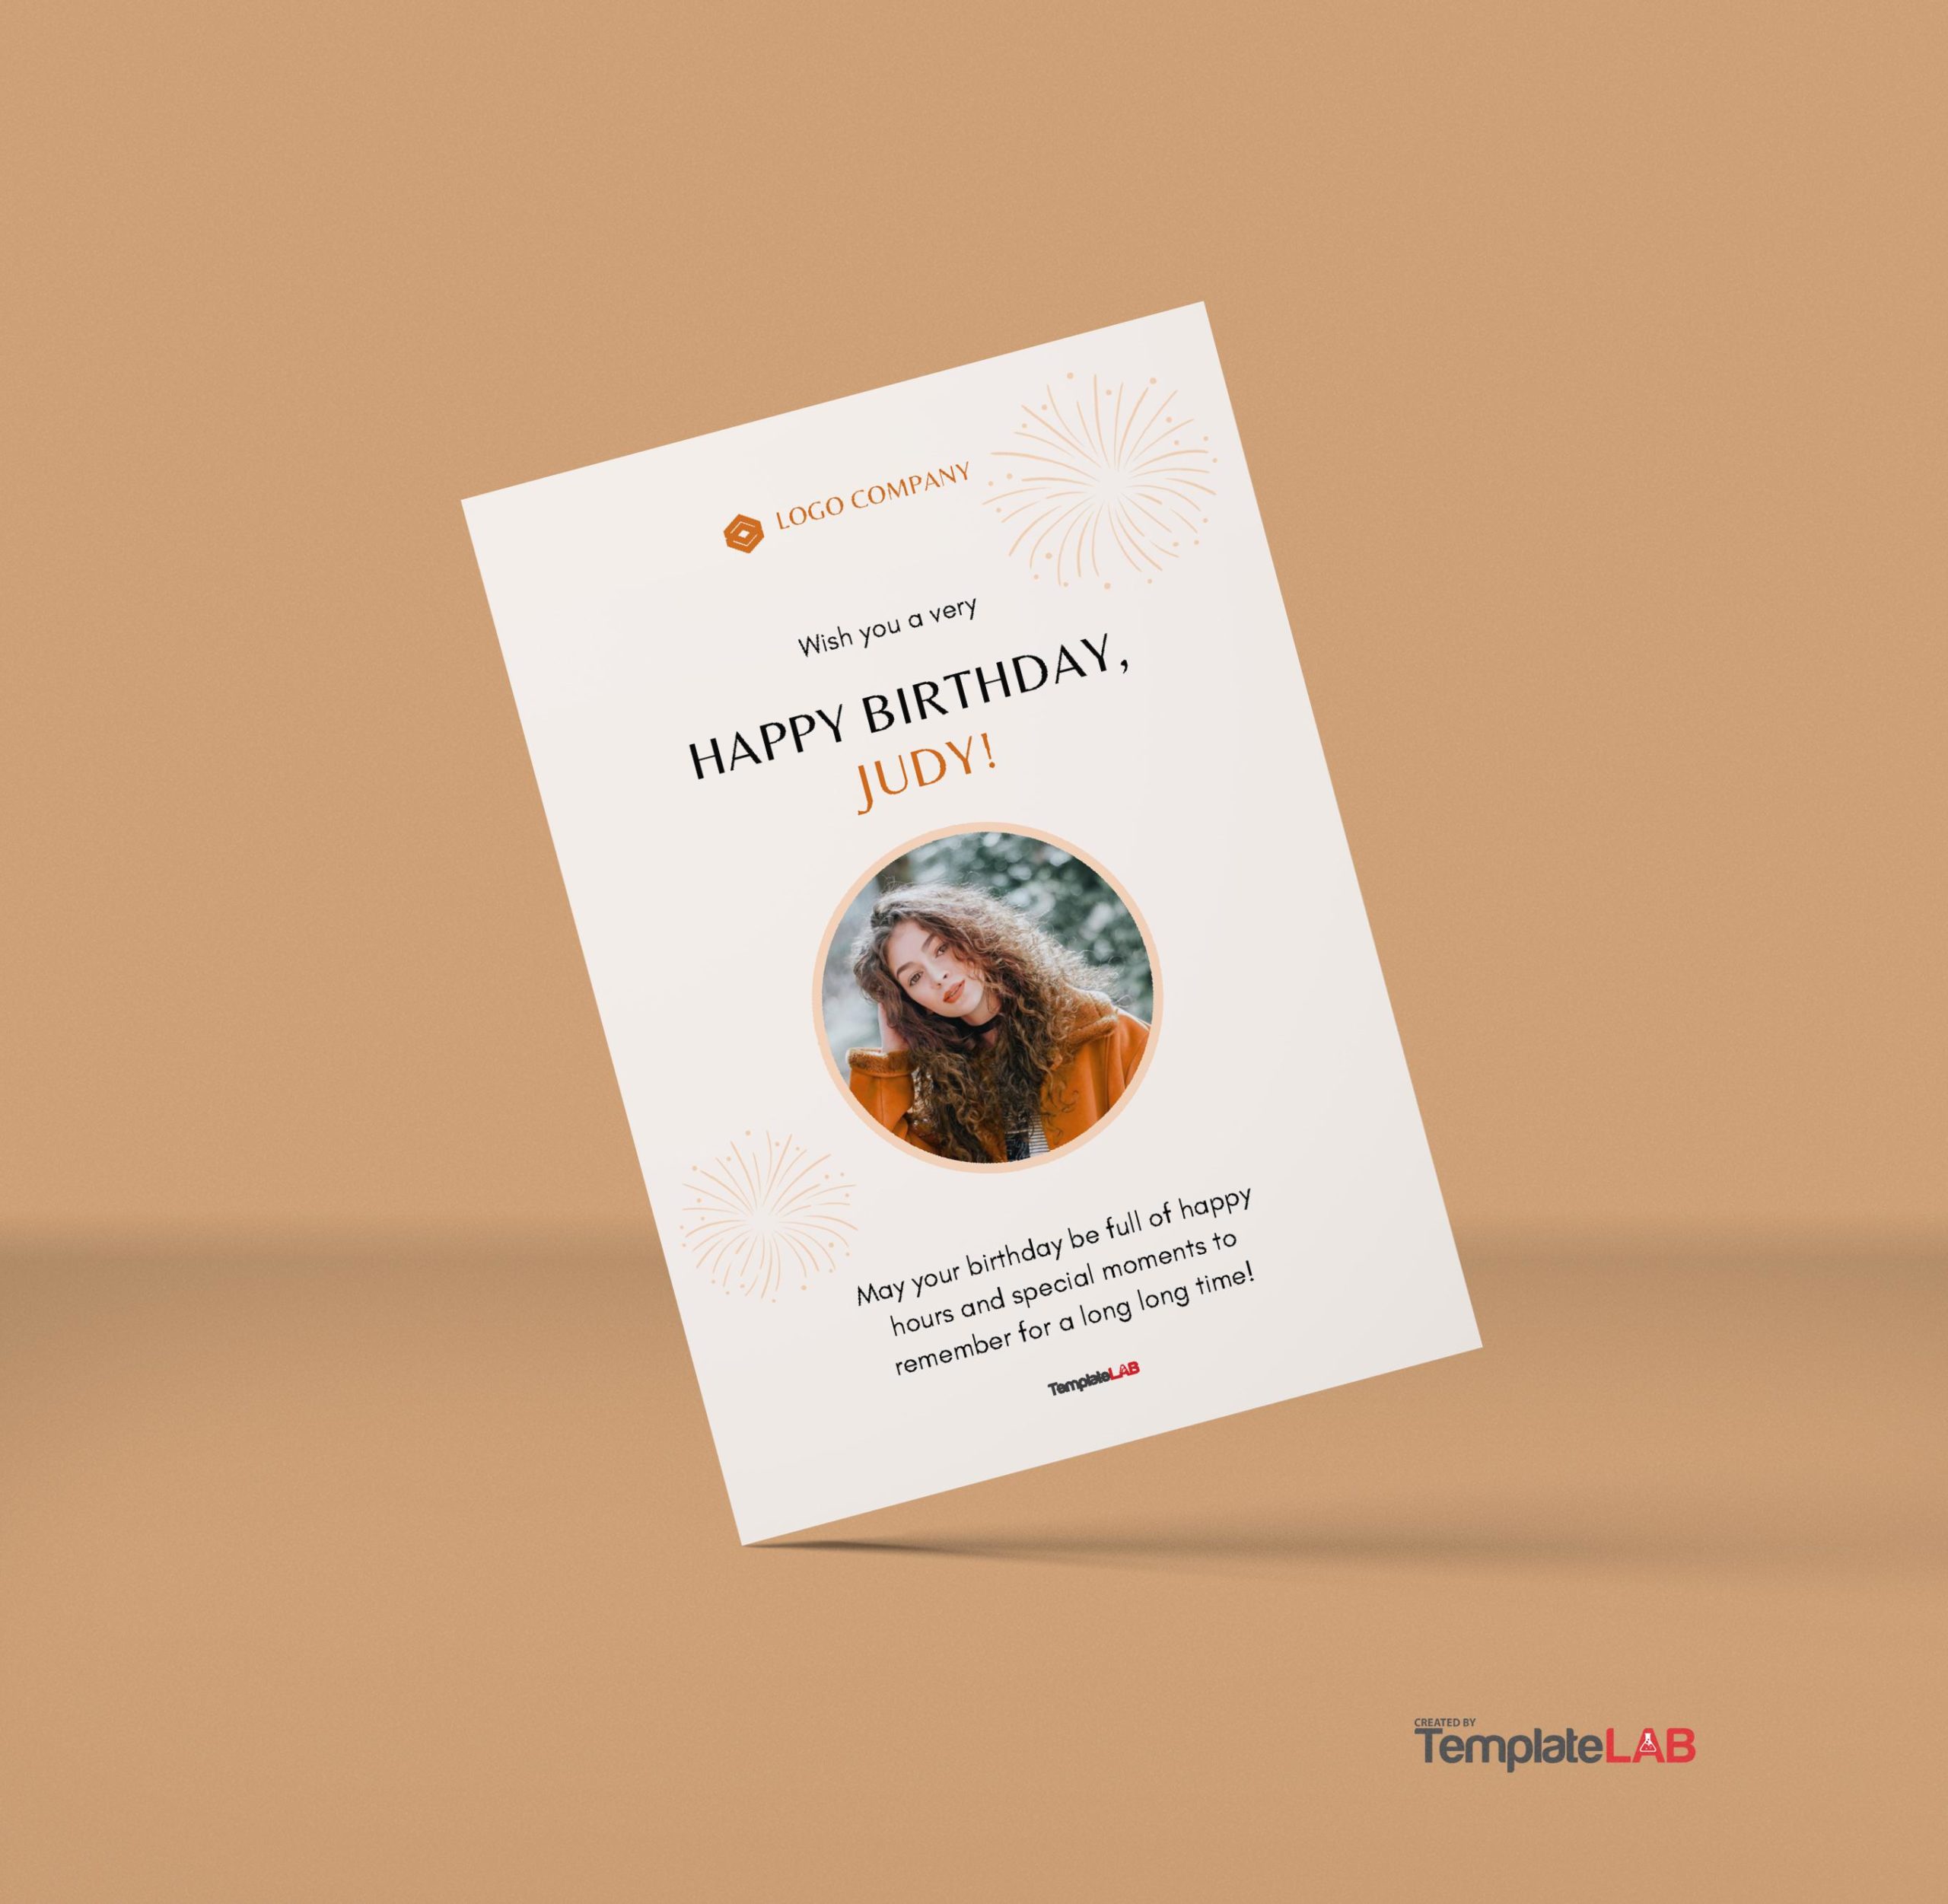 Free Corporate Birthday Card Template